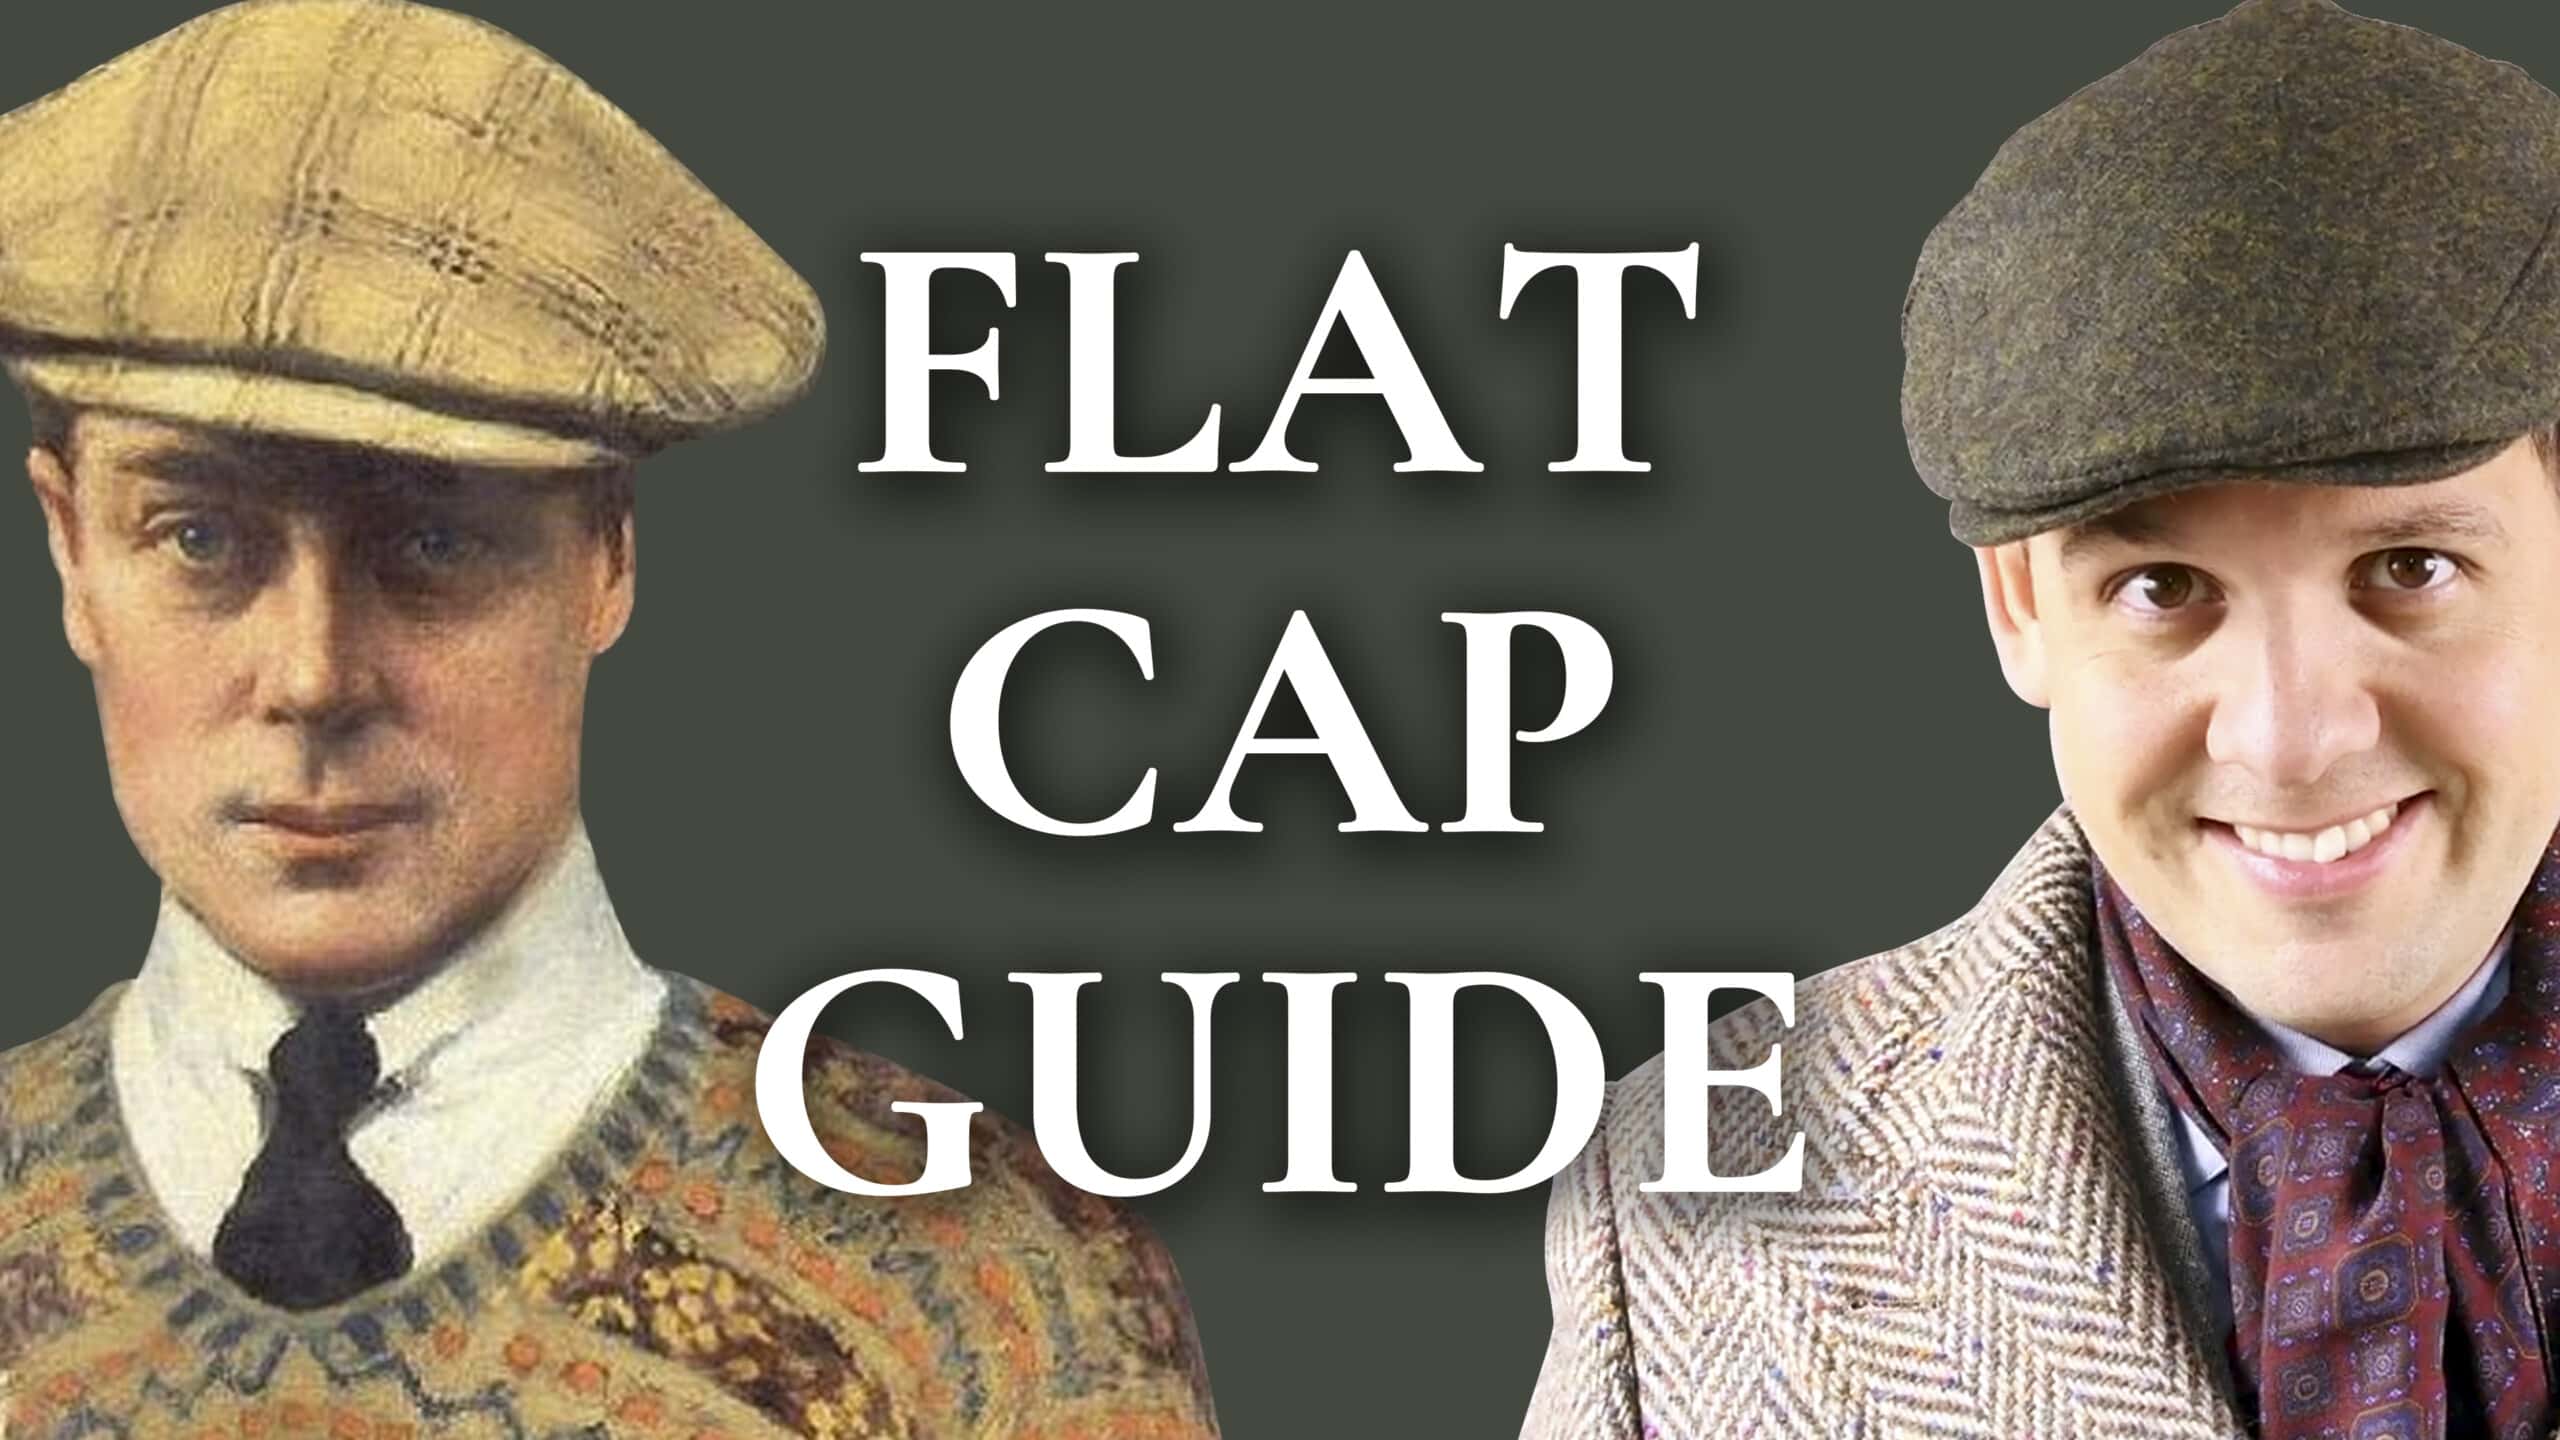 Style Flat Newspaper & Hat Cap Guide Boy